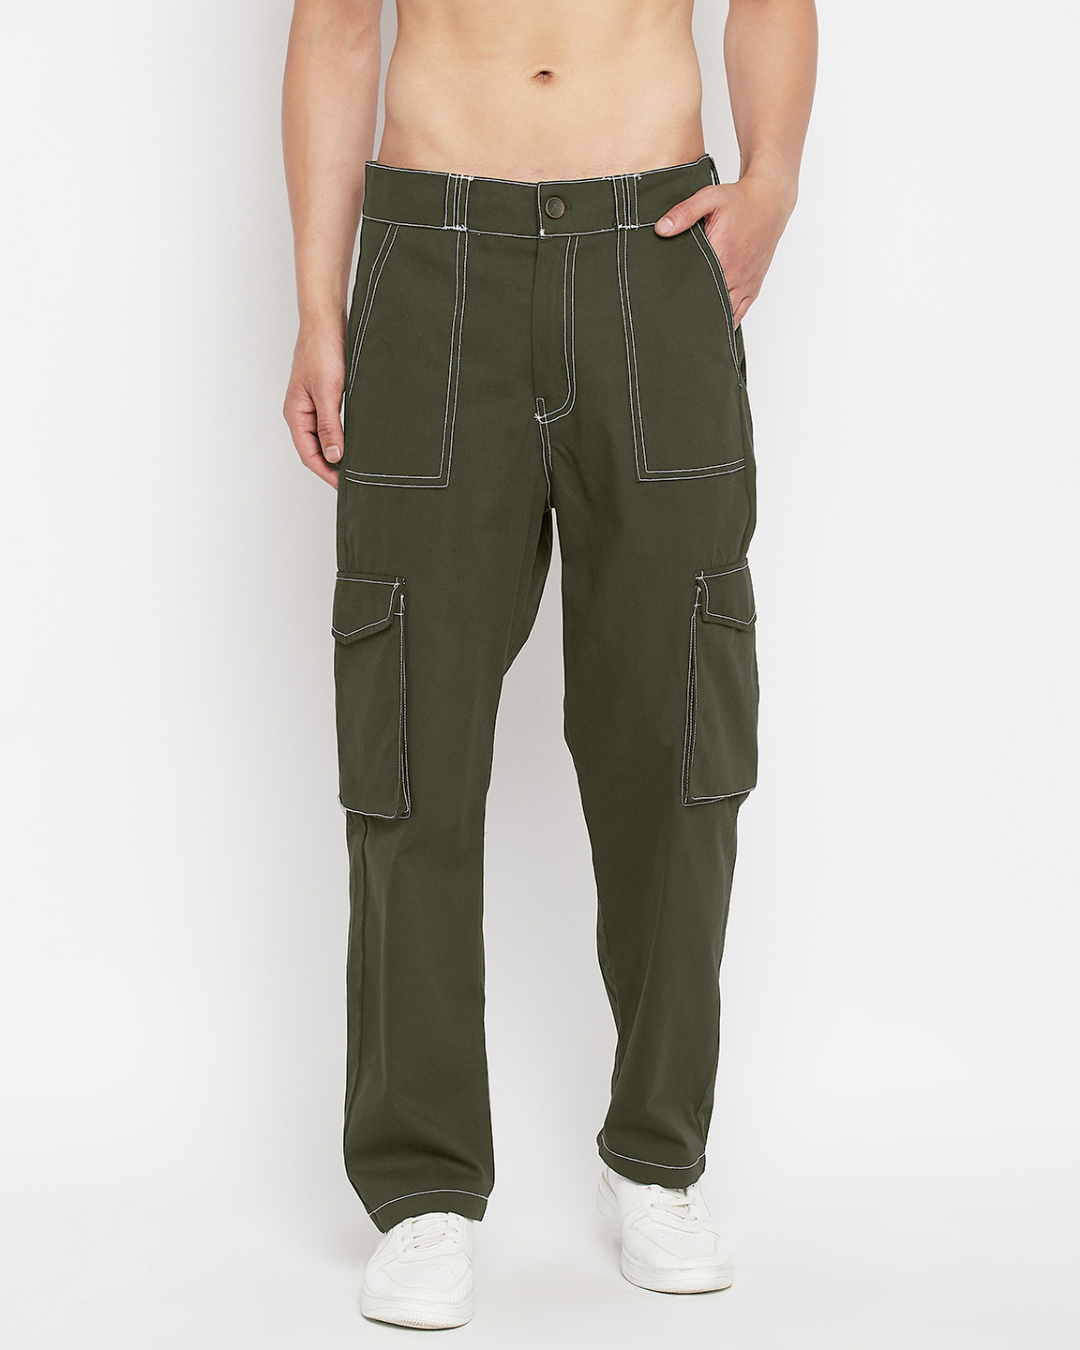 2022 Ankle Long Trousers Men's Casual Cotton Elastic Mid Rise Cargo Pants |  eBay